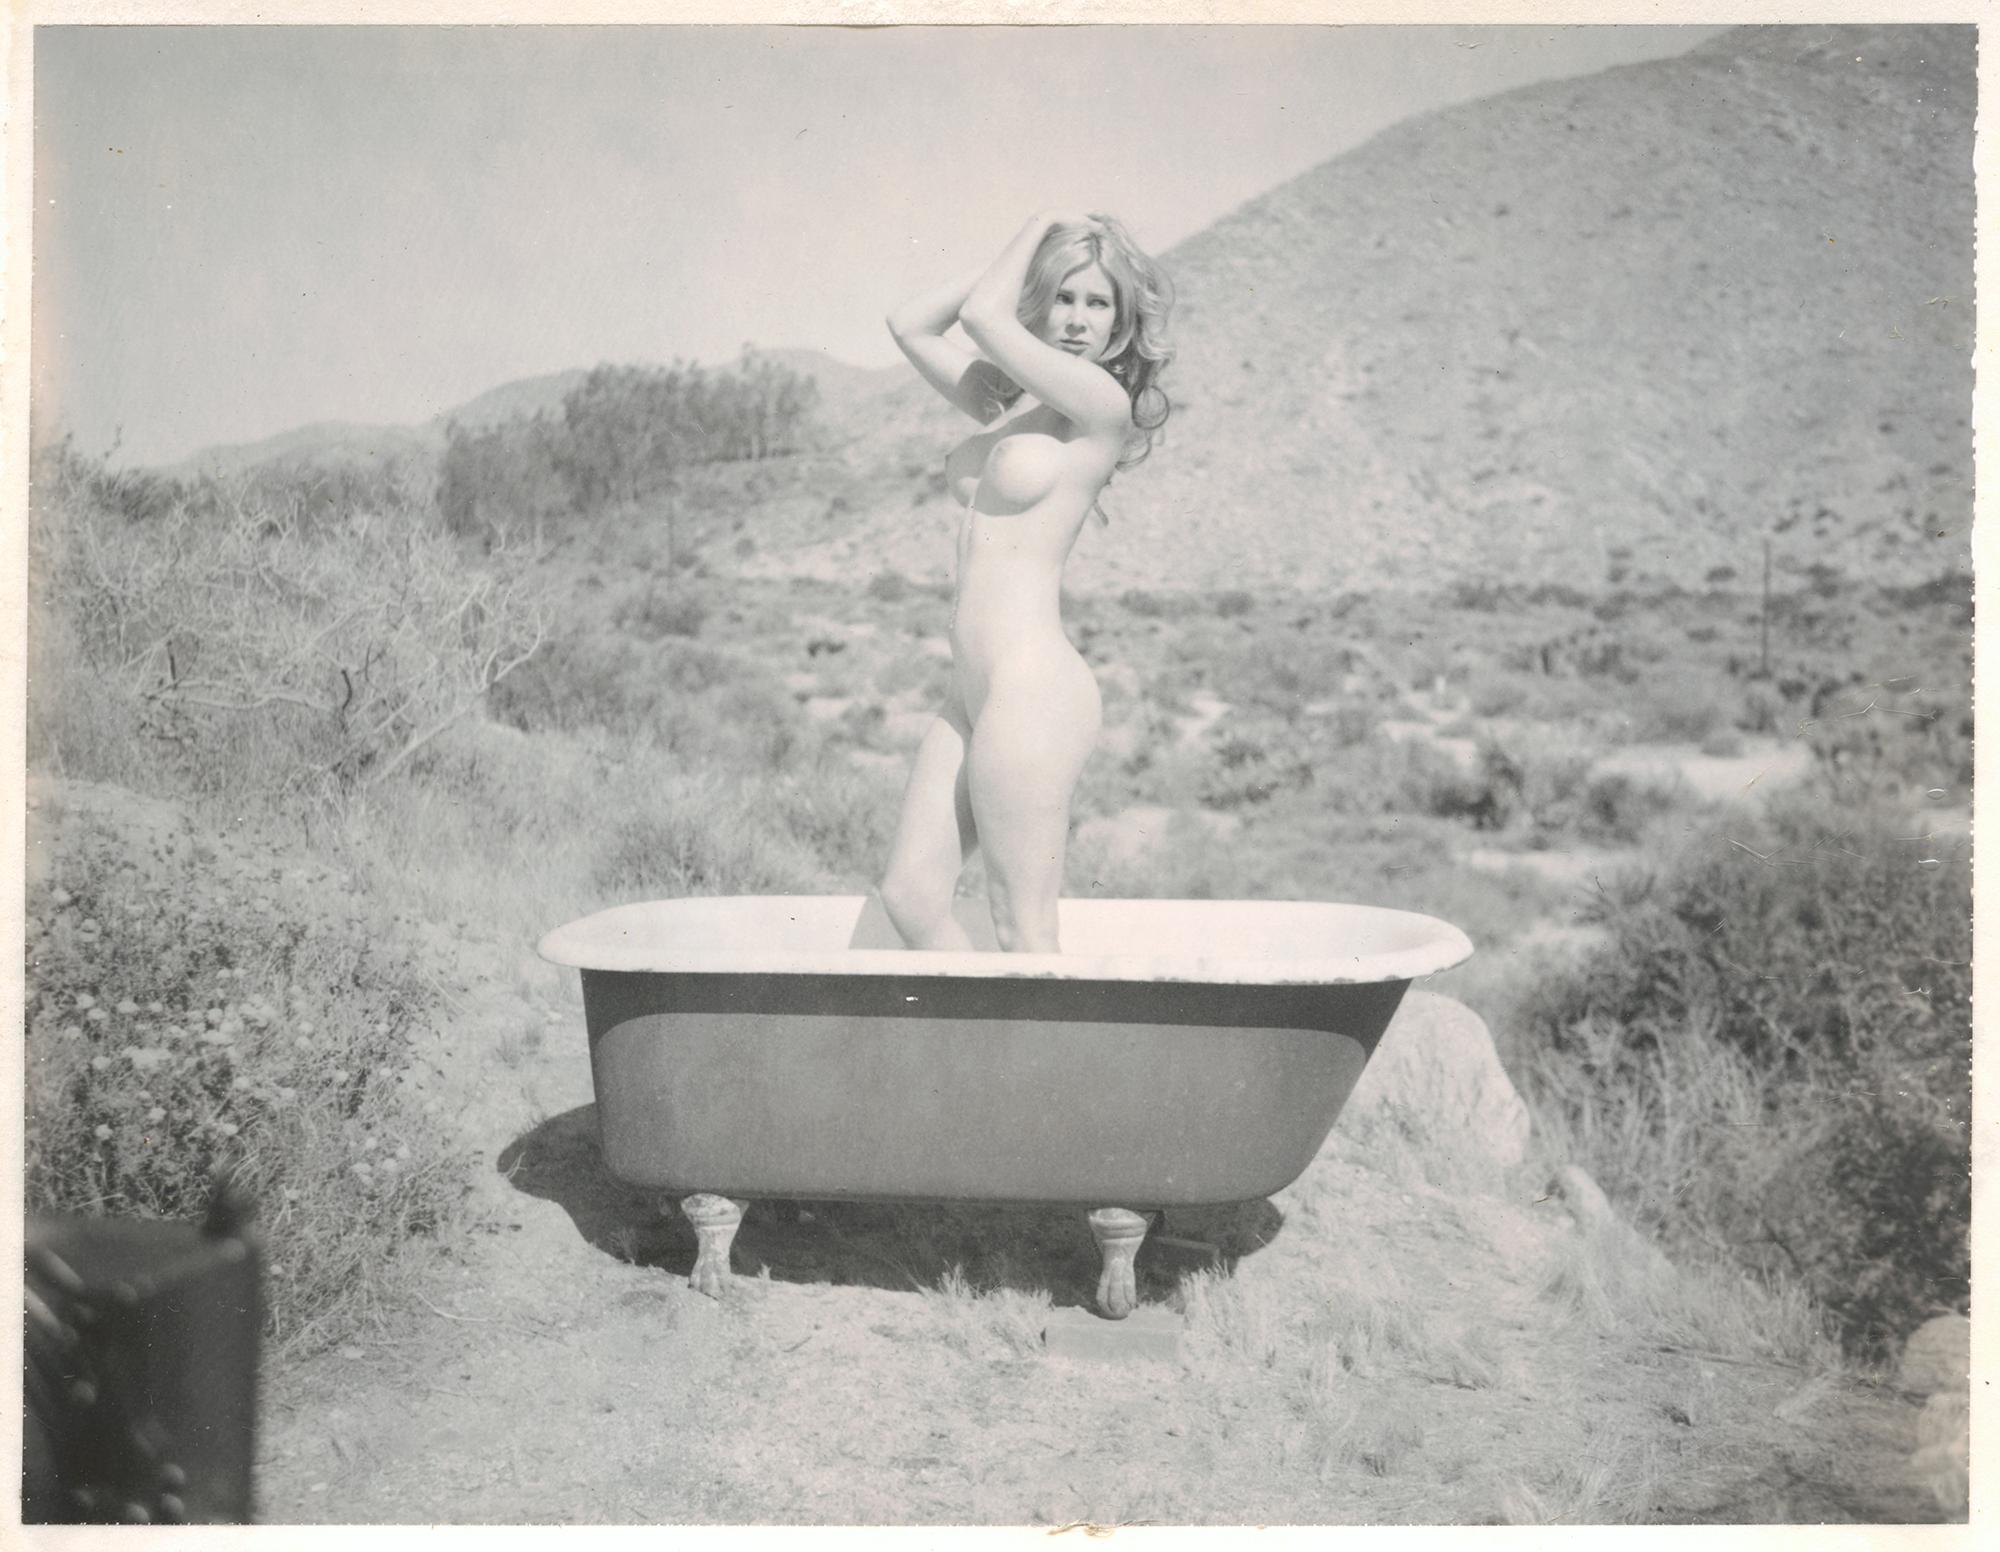 Stefanie Schneider Nude Photograph - Sundays (Heavenly Falls) - Contemporary, 21st Century, Polaroid, Nude